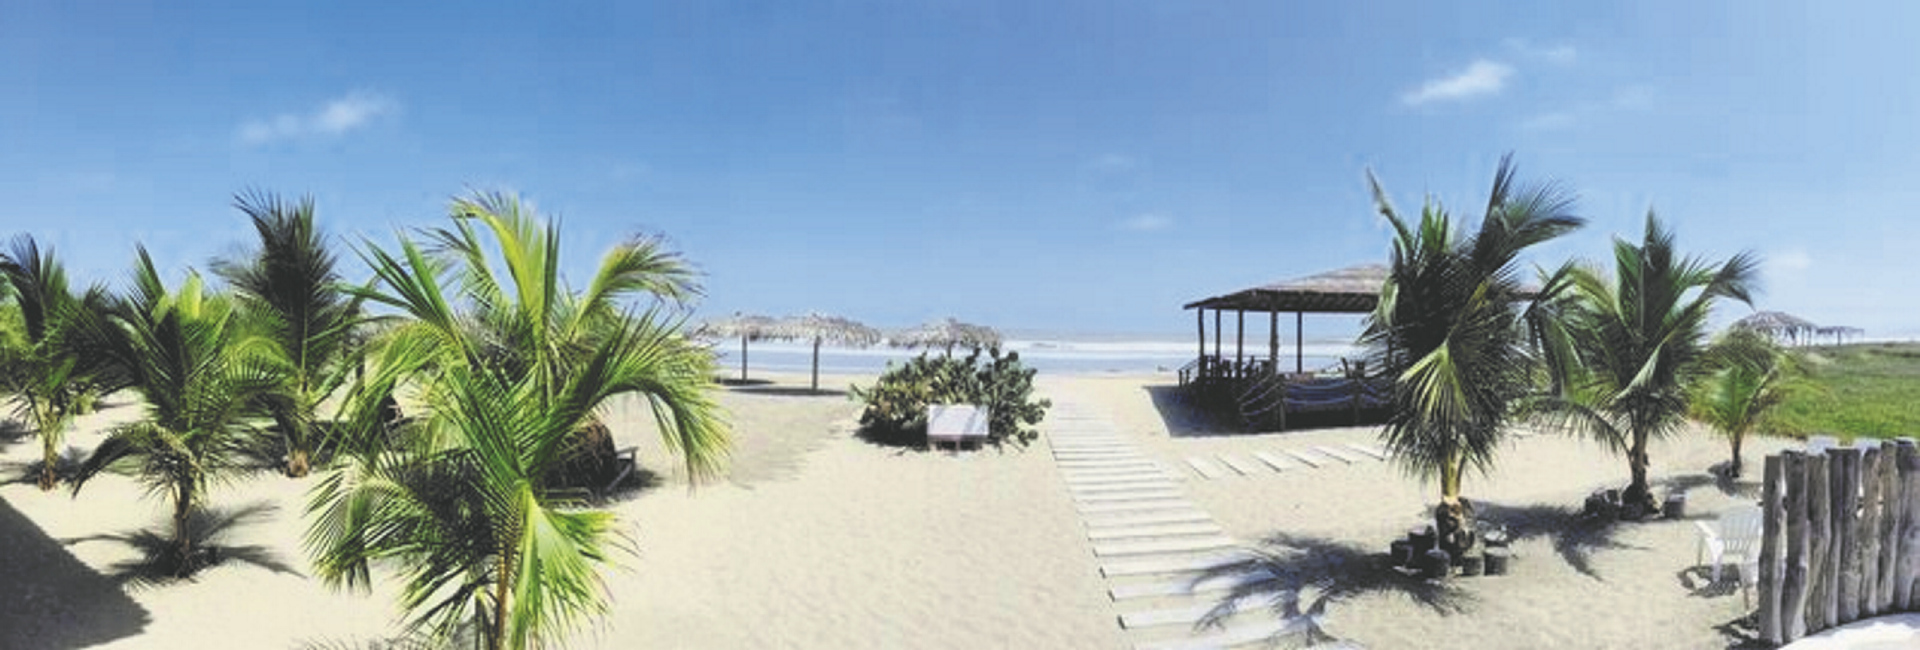 Strand am Hotel Playa Paraiso